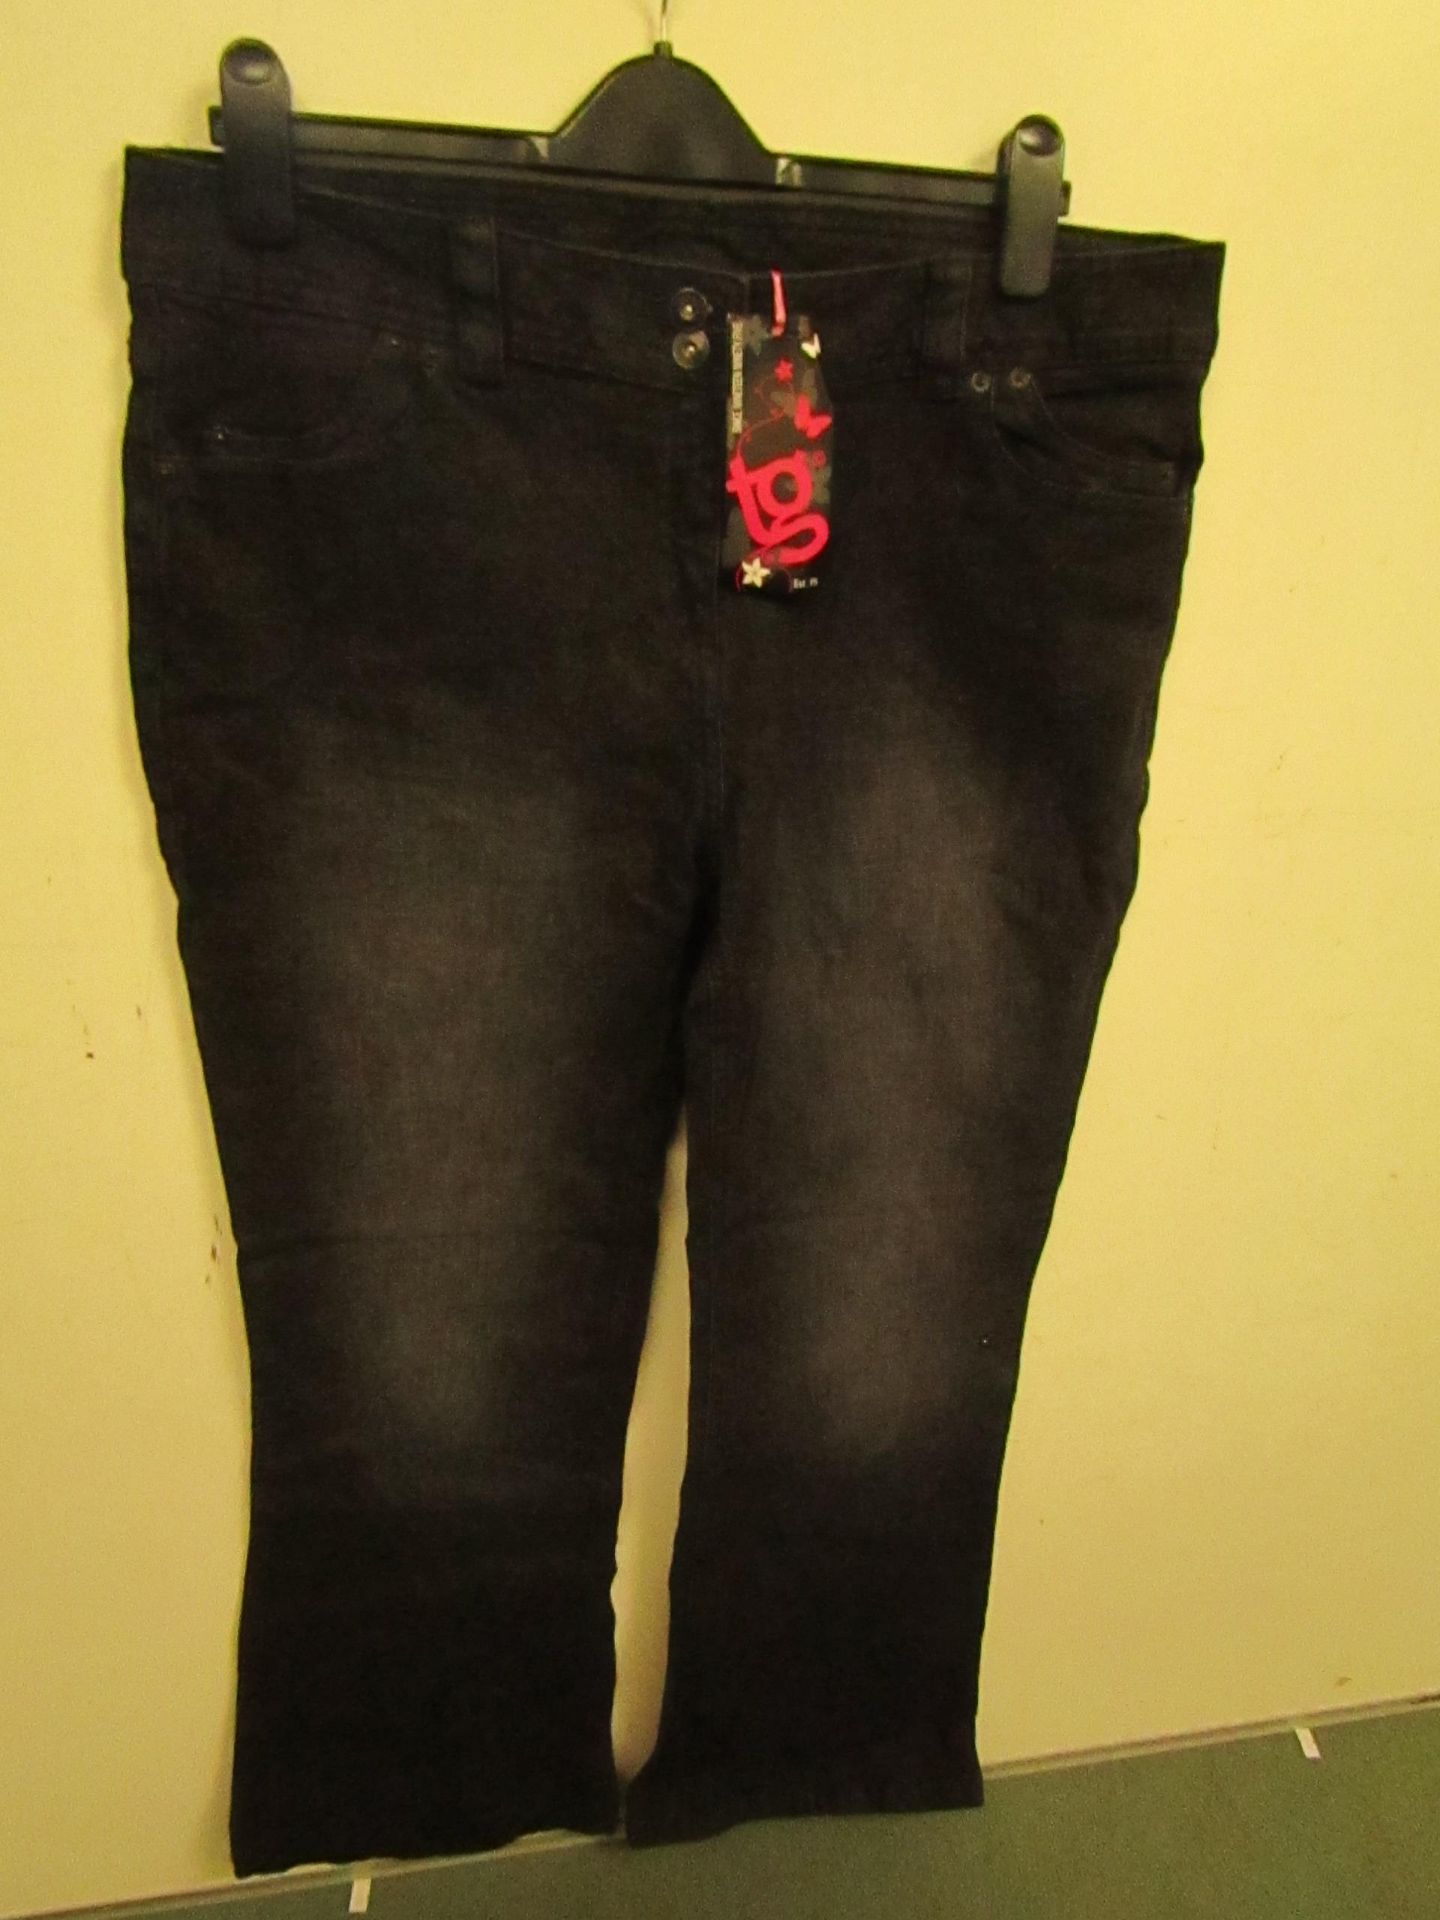 1 x TG ladies Black Denim Jeans size 16 new & packaged